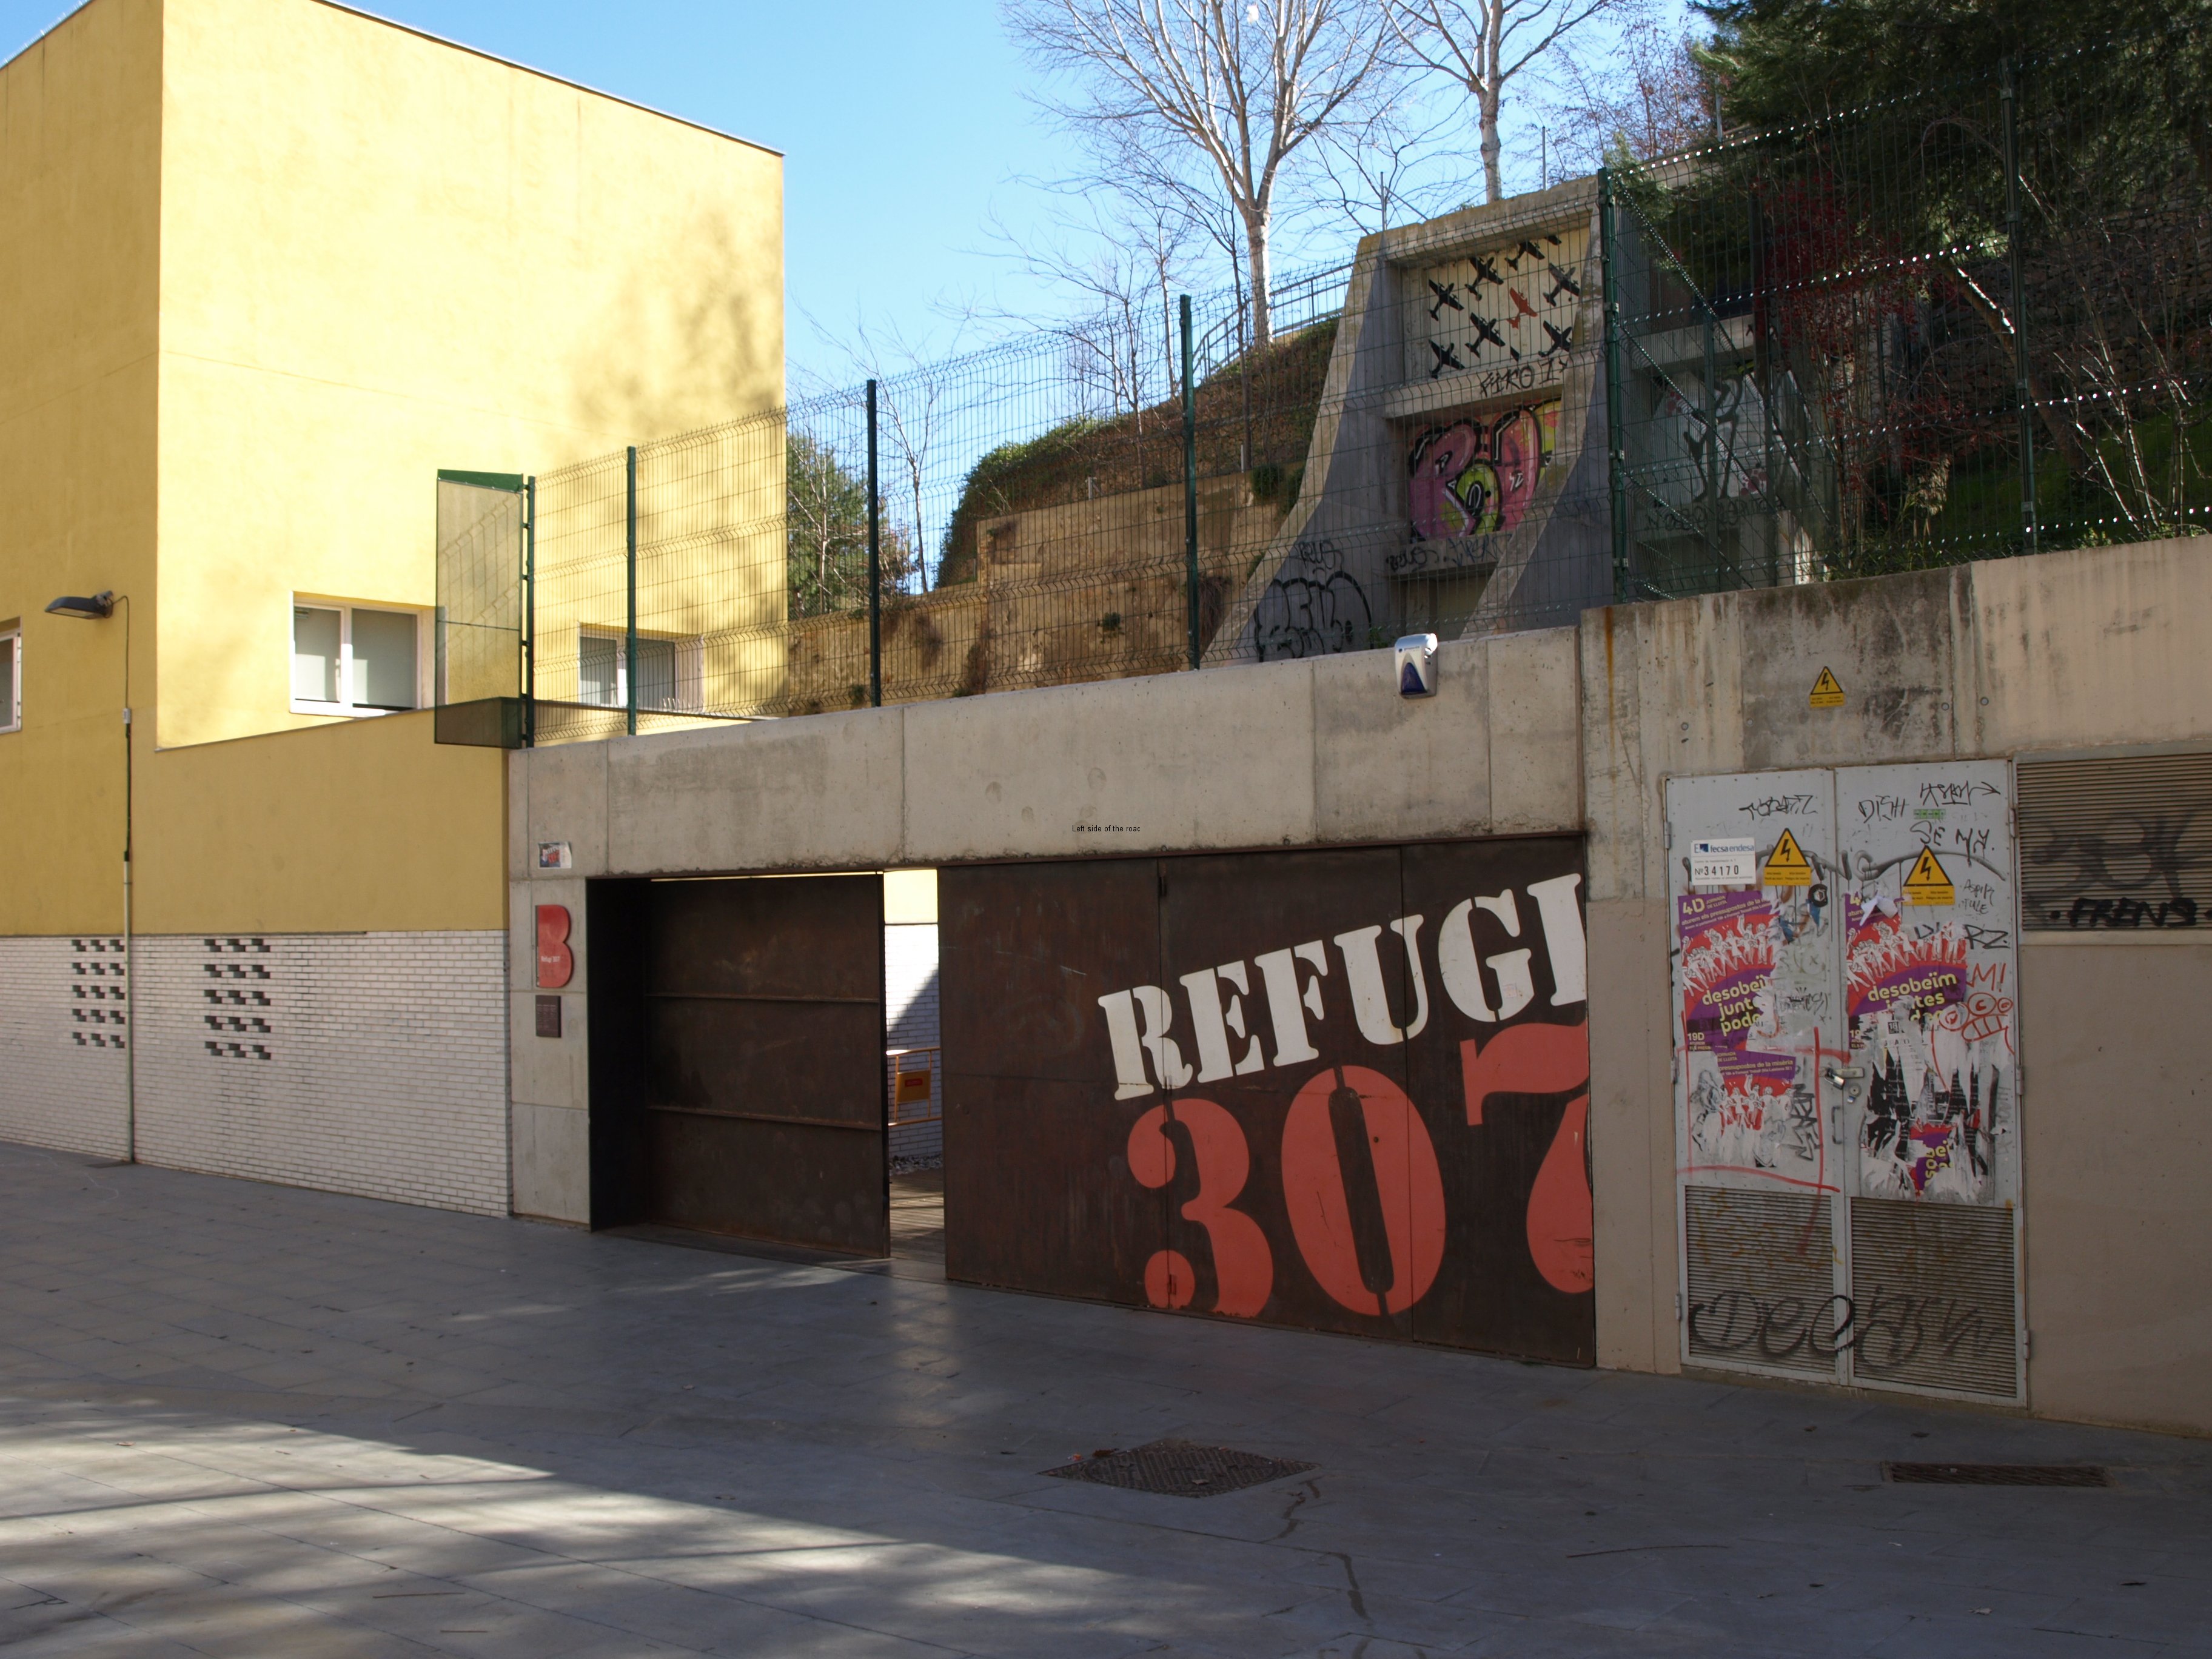 Refugi 307, Poble Sec, Barcelona